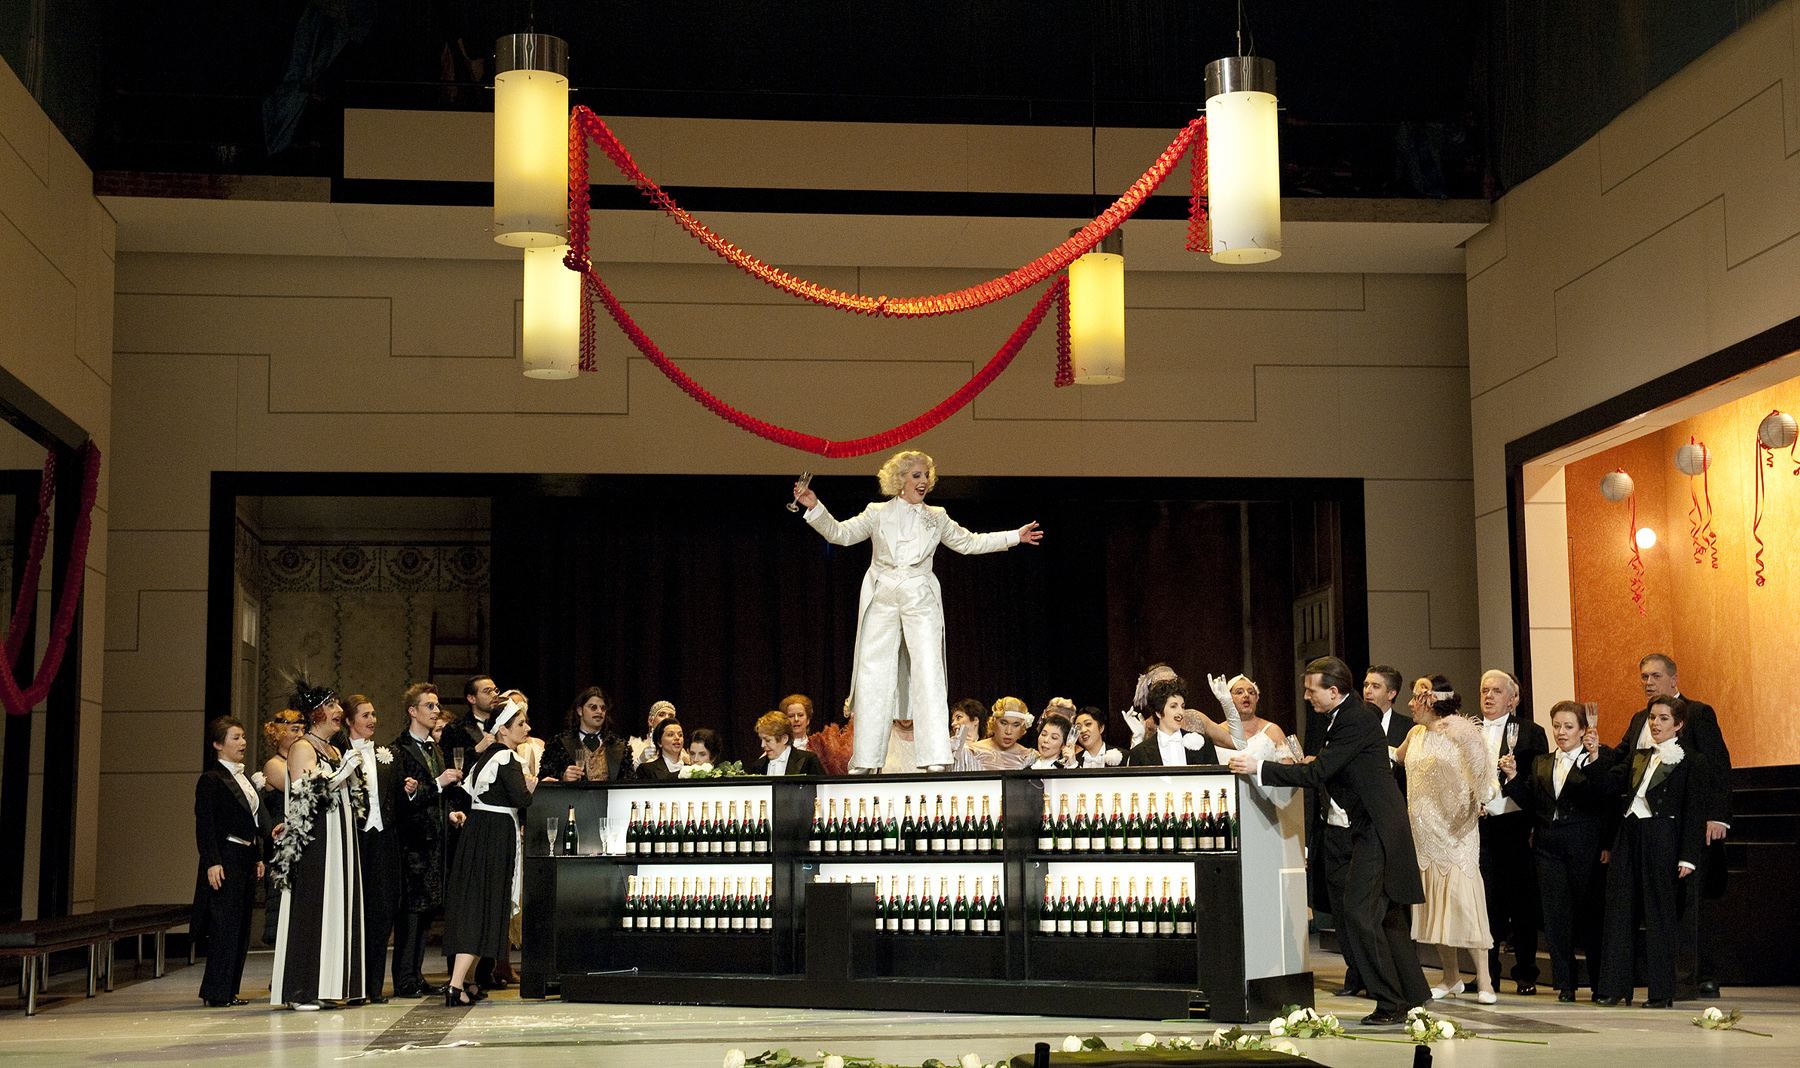 Richard Strauss' "Arabella" am Staatstheater Nürnberg